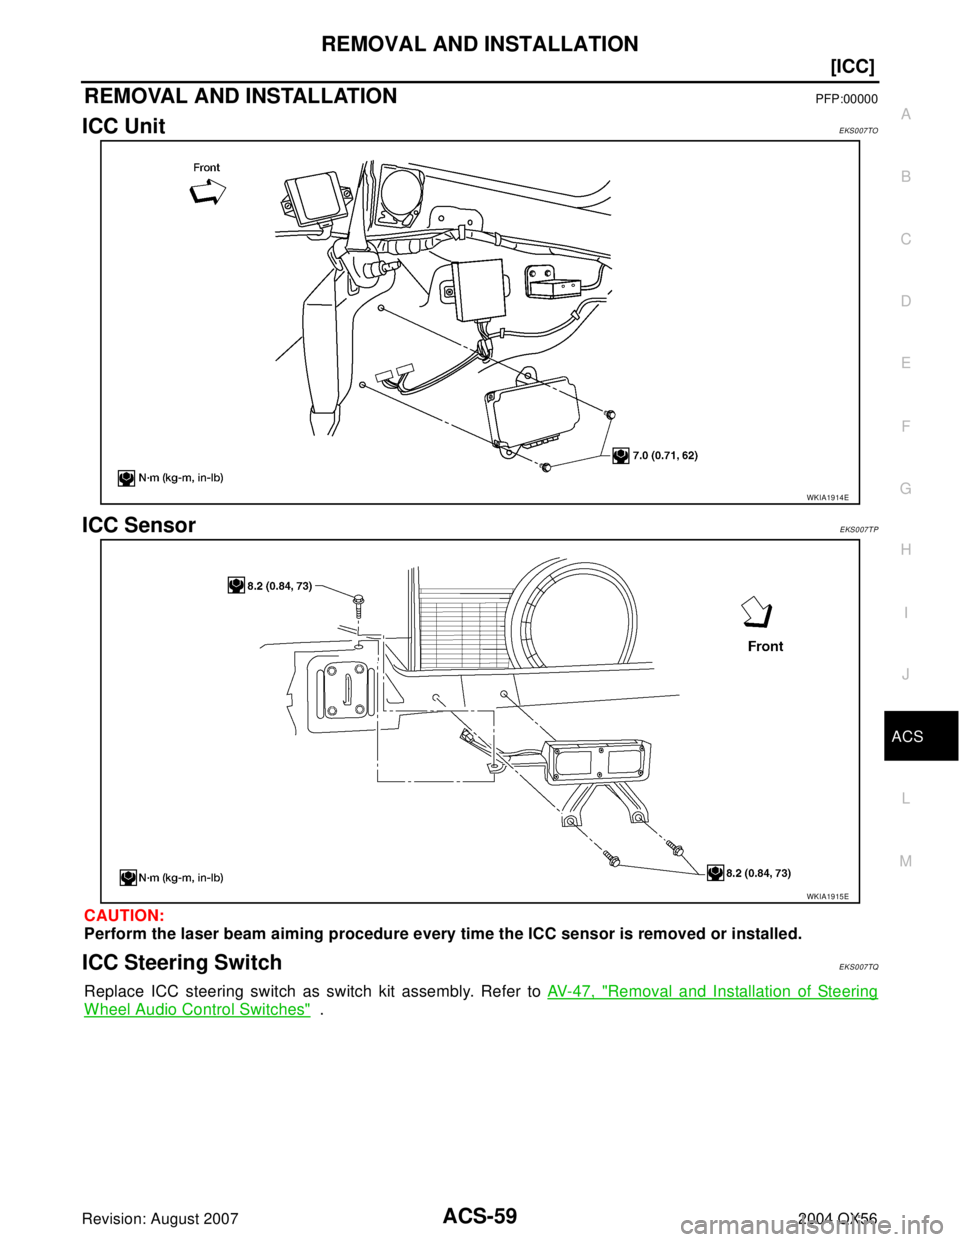 INFINITI QX56 2004  Factory Service Manual REMOVAL AND INSTALLATION
ACS-59
[ICC]
C
D
E
F
G
H
I
J
L
MA
B
ACS
Revision: August 20072004 QX56
REMOVAL AND INSTALLATIONPFP:00000
ICC UnitEKS007TO
ICC SensorEKS007TP
CAUTION:
Perform the laser beam ai